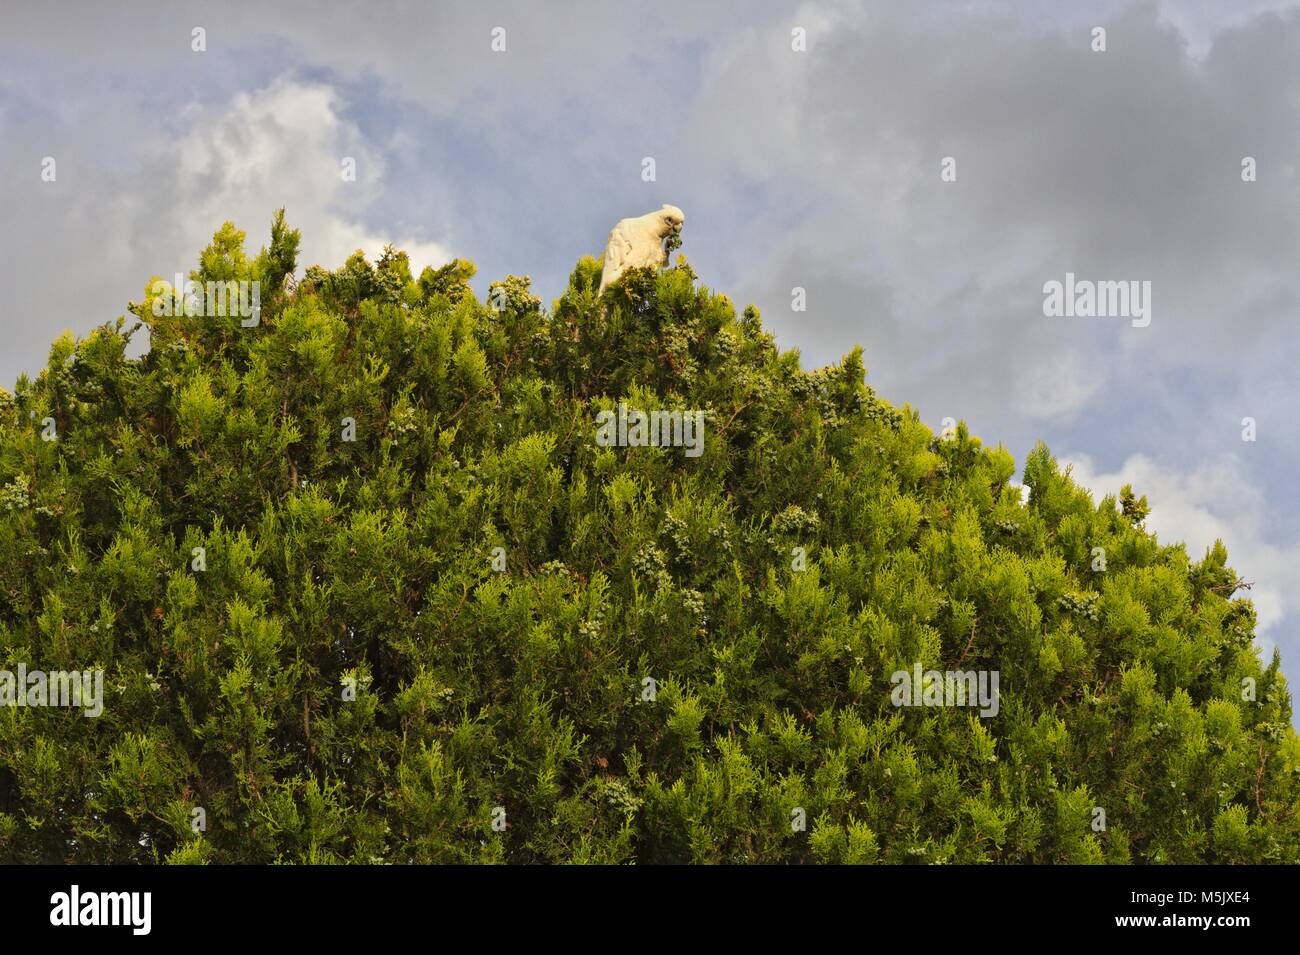 Little Corella, an Australian parrot, feeding on top of a tree, against a cloudy sky. Stock Photo